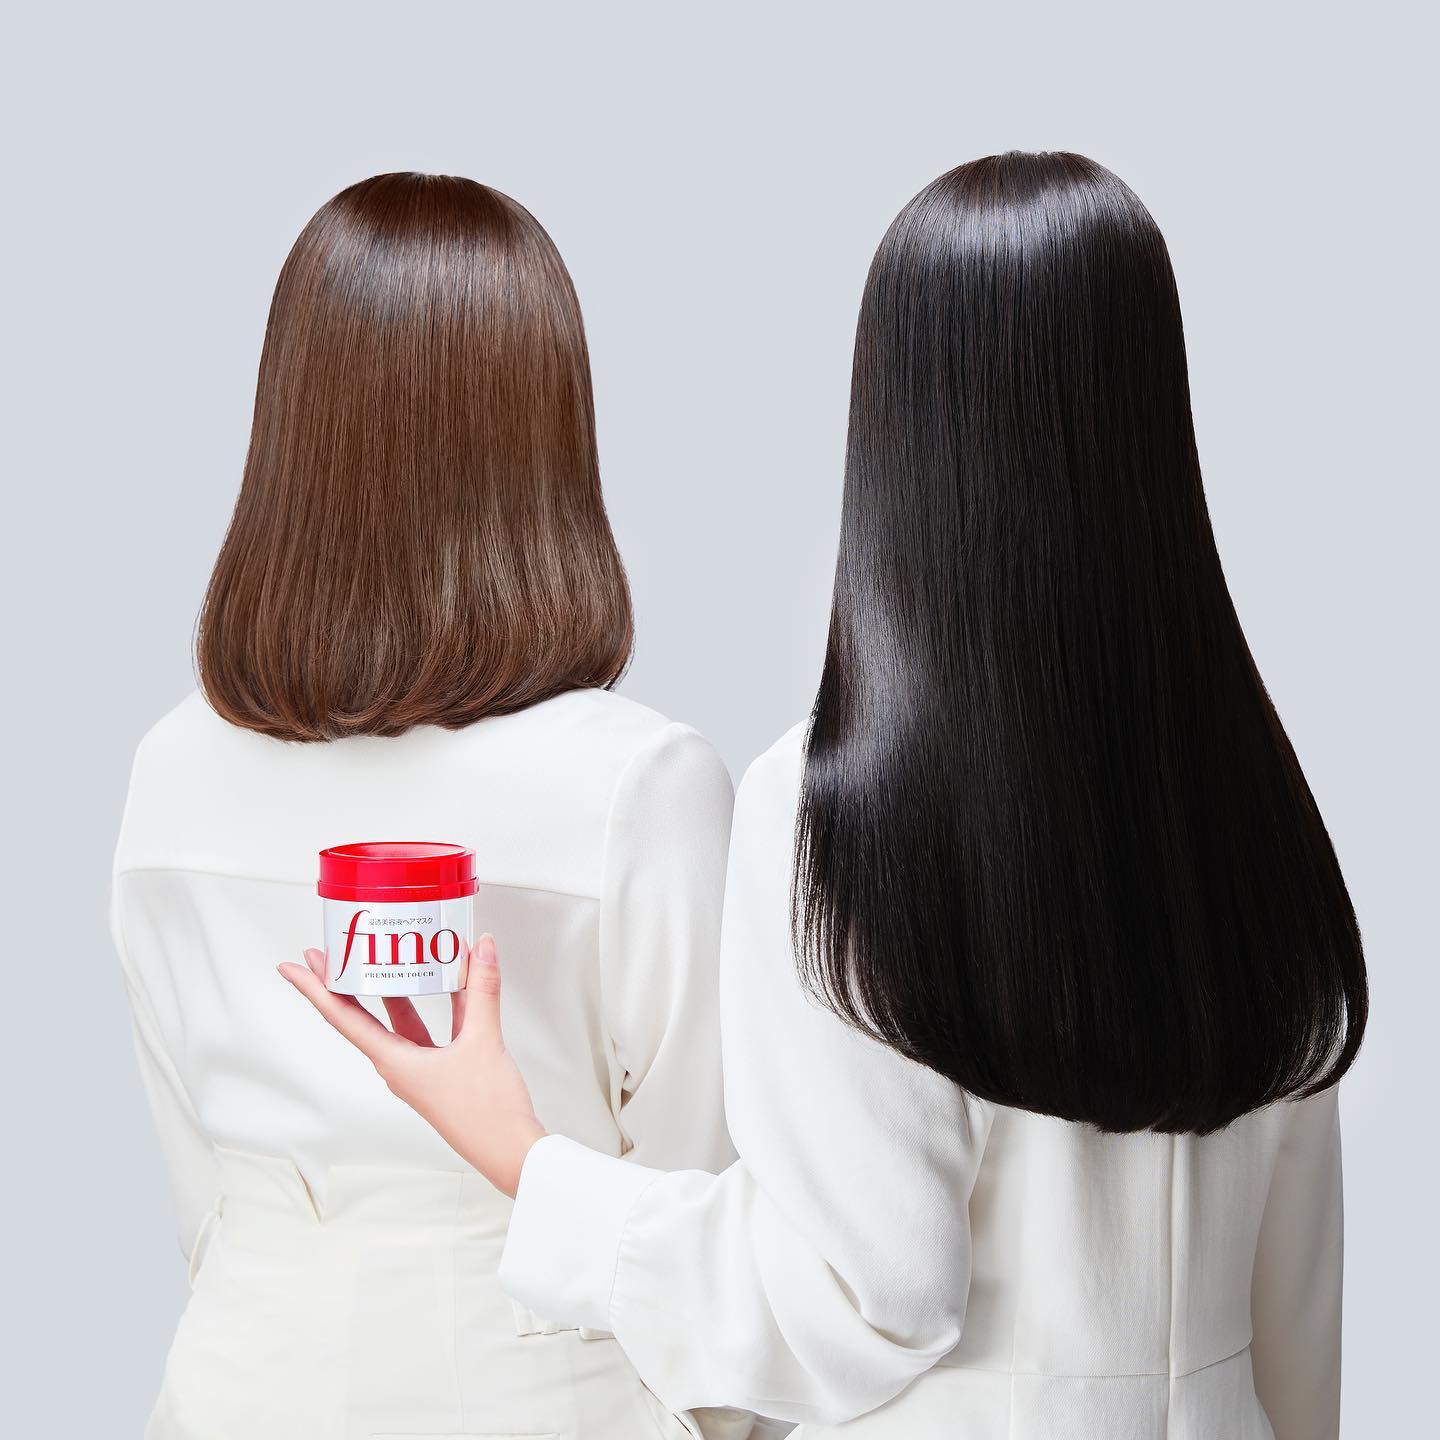  Shiseido Fino Premium Touch Hair Mask, 8.11 Ounce : Beauty &  Personal Care